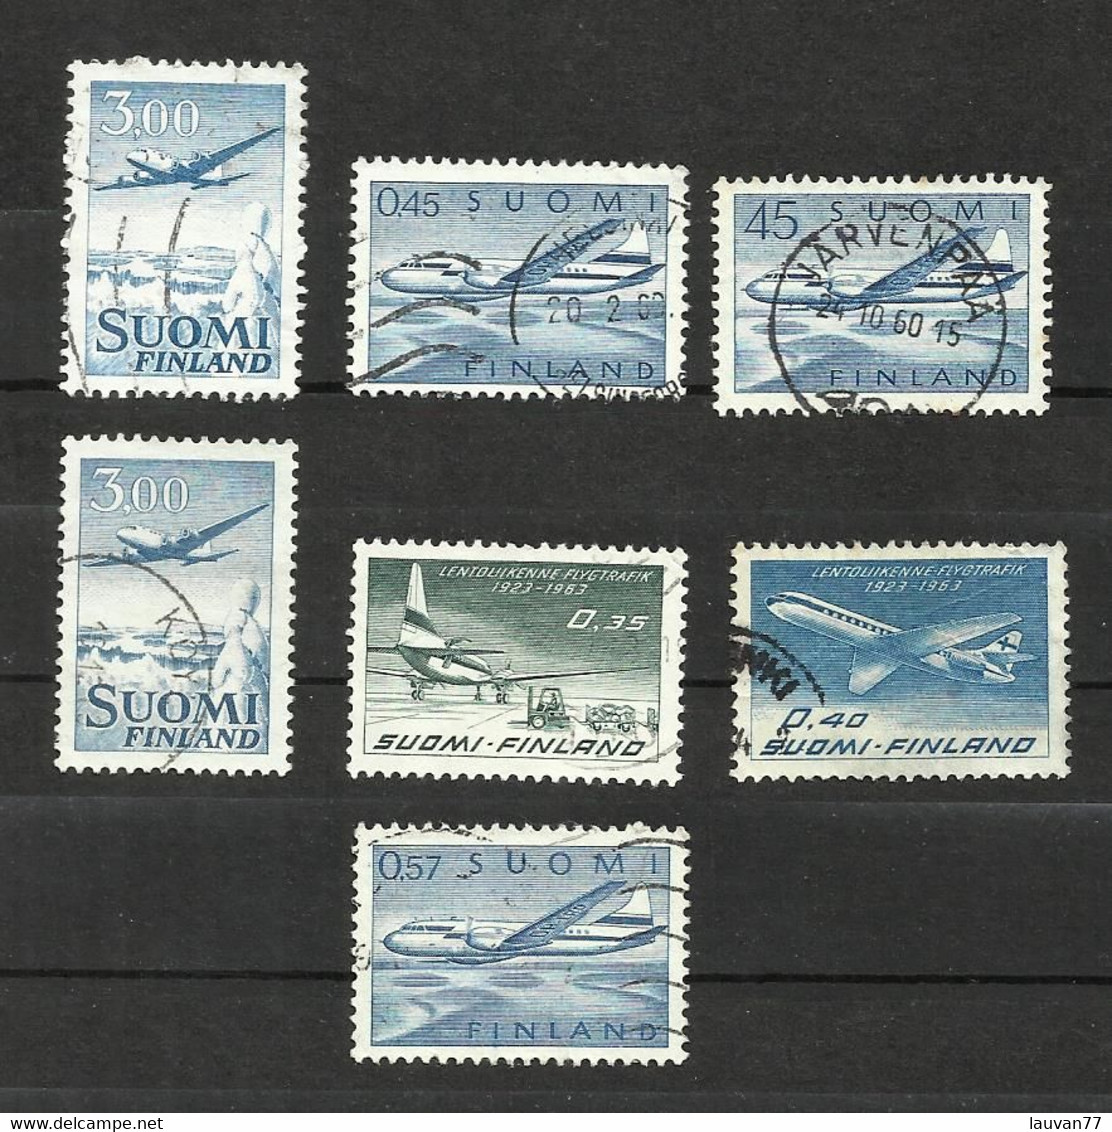 Finlande Poste Aérienne N°4 à 6, 9 à 12 Cote 7.80€ - Used Stamps